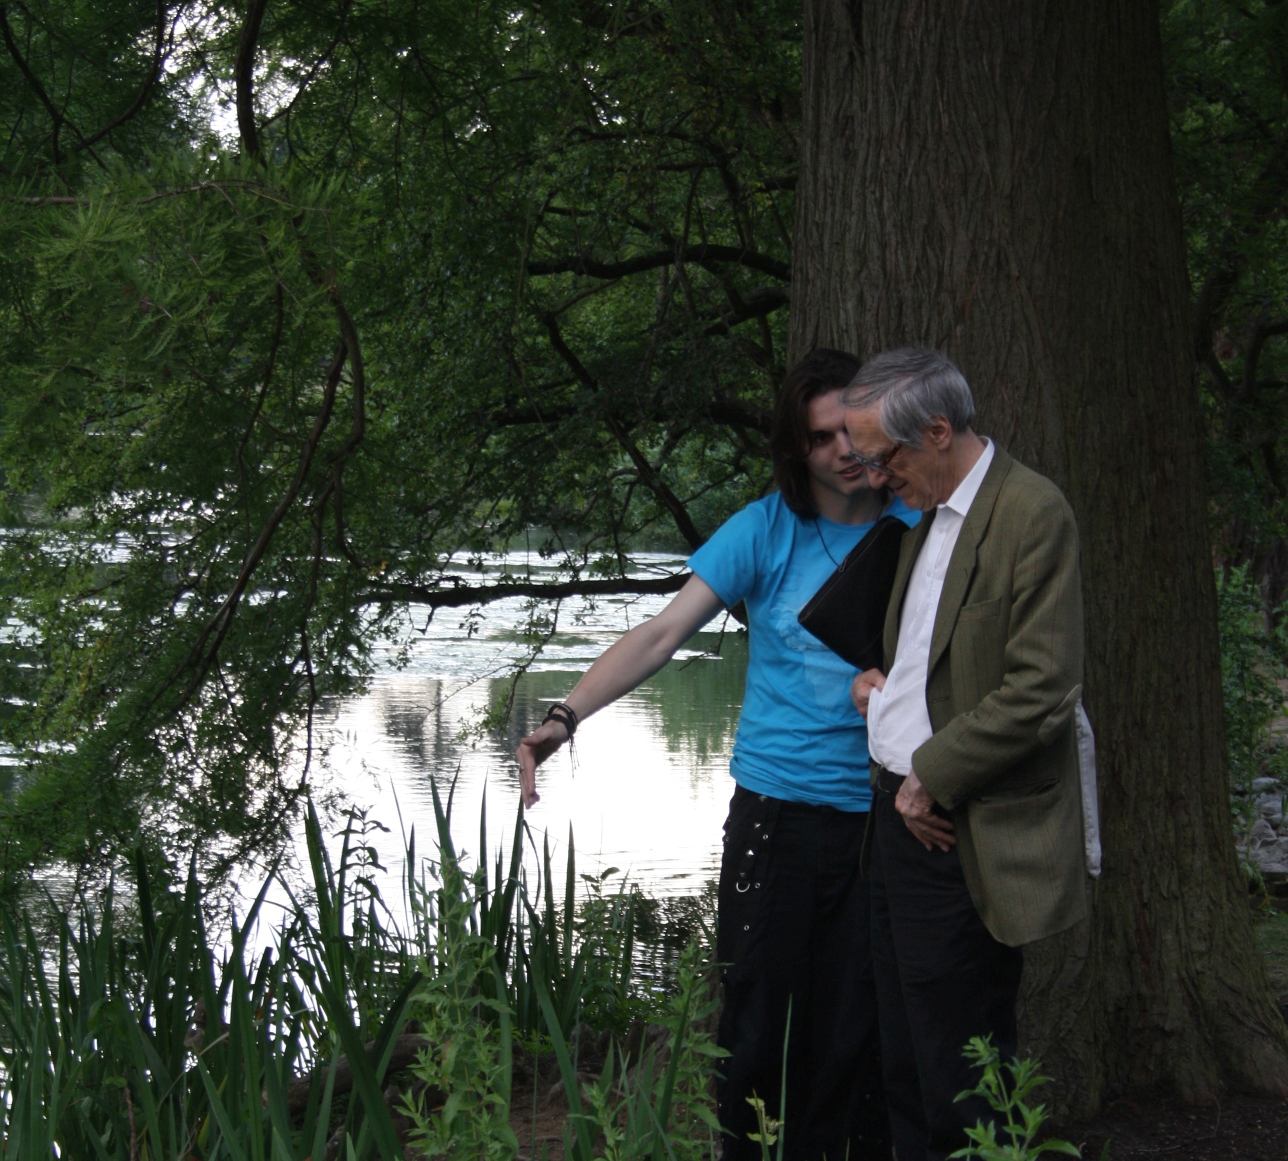 Shaun Chamberlin and David Fleming at Kew Gardens, beside a lake and under a swamp cypress